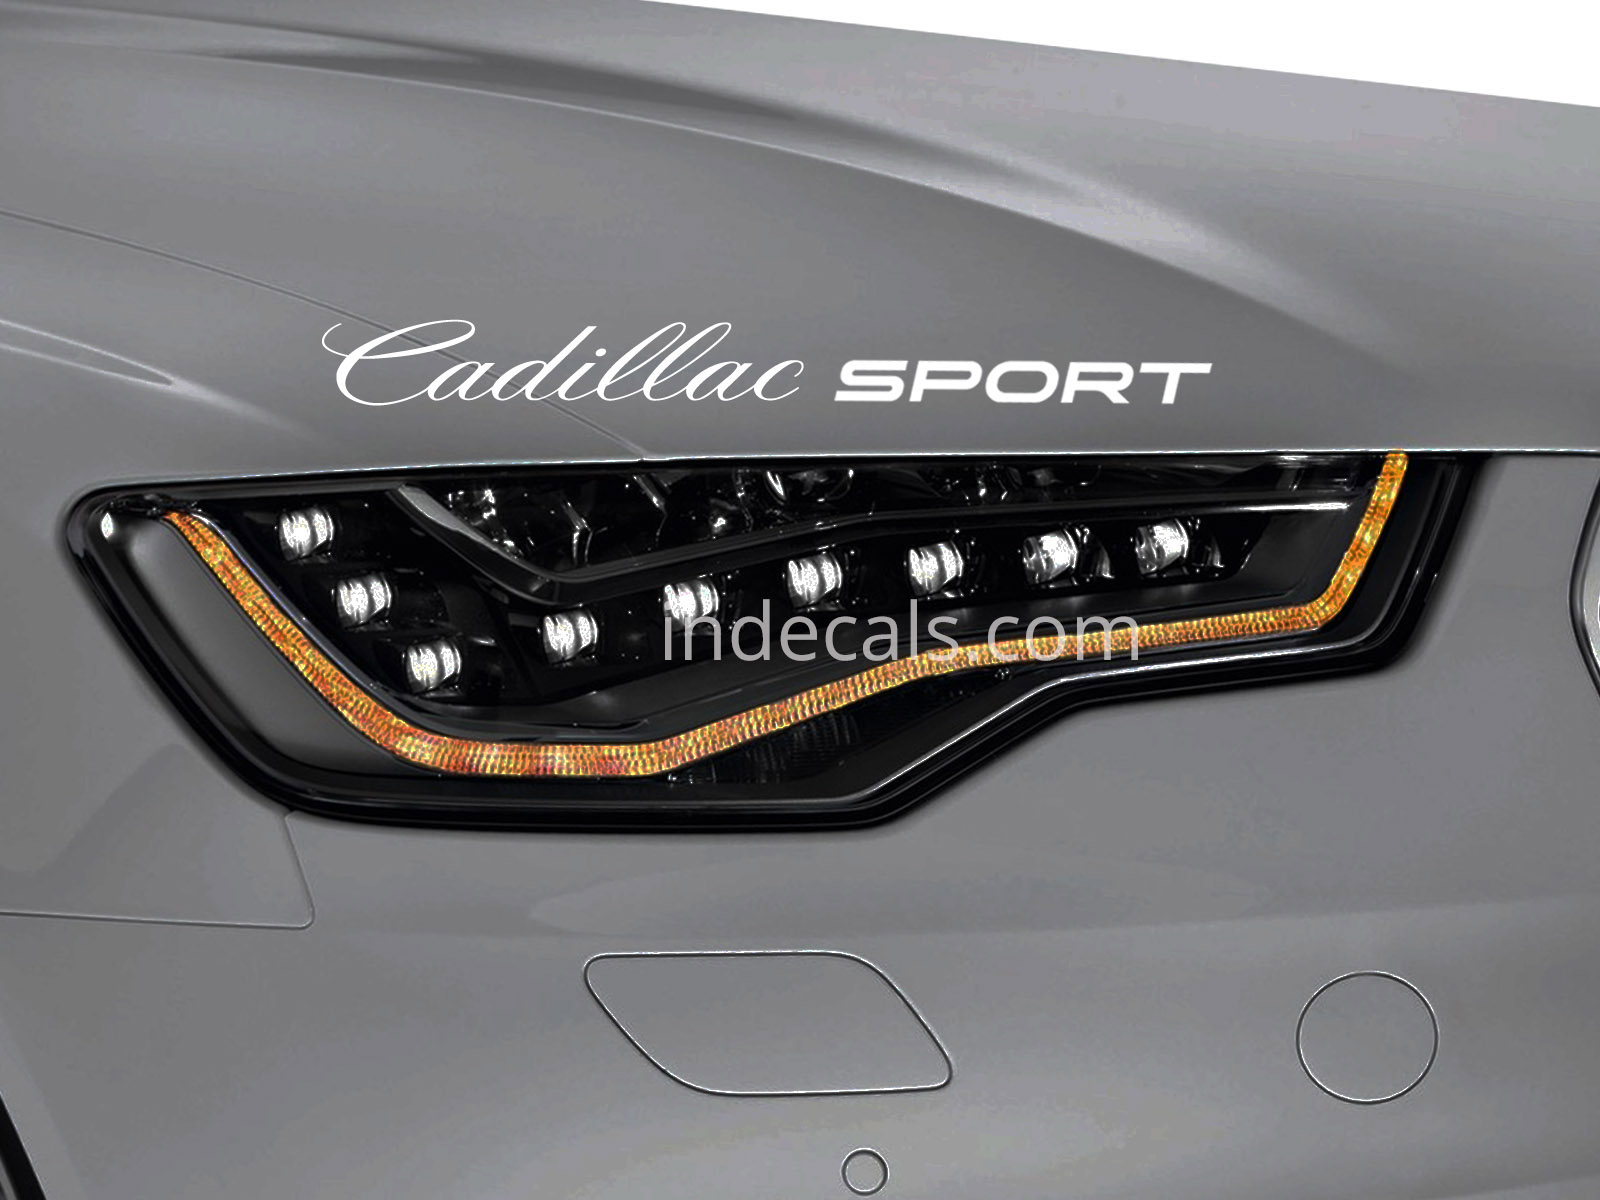 1 x Cadillac Sport Sticker for Eyebrow - White